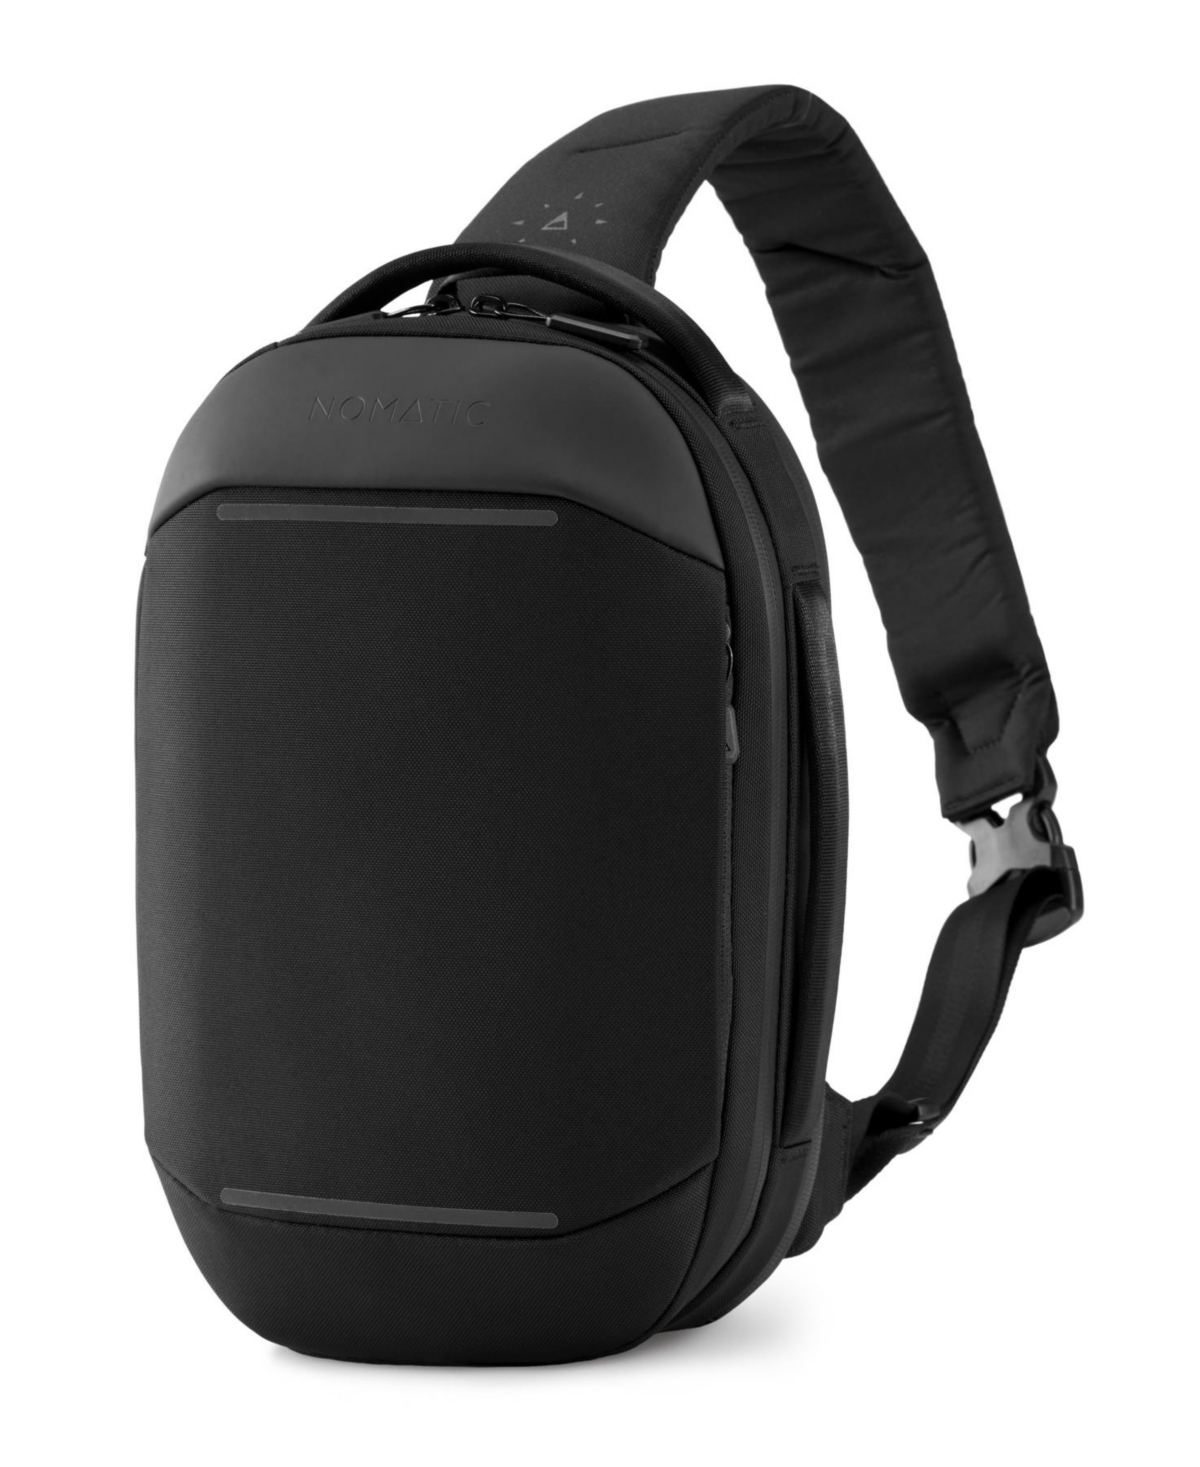 Navigator Sling 6L - Cross body Water Resistant Minimalist Bag - Black